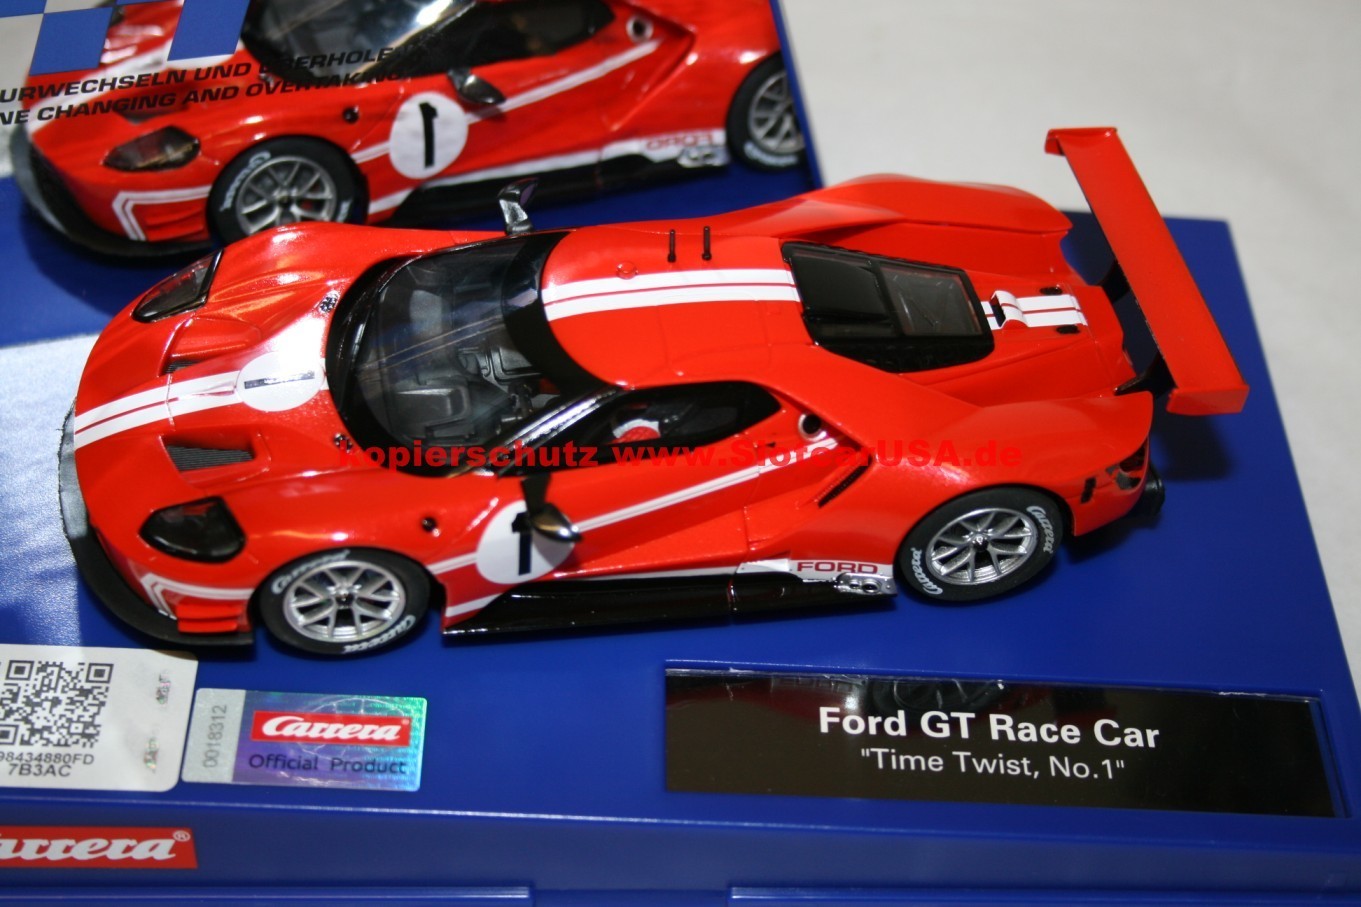 Carrera 30873 Ford GT Race Car Time Twist #1 Digital 132 Slot Car Racing Vehicle 1:32 Scale 